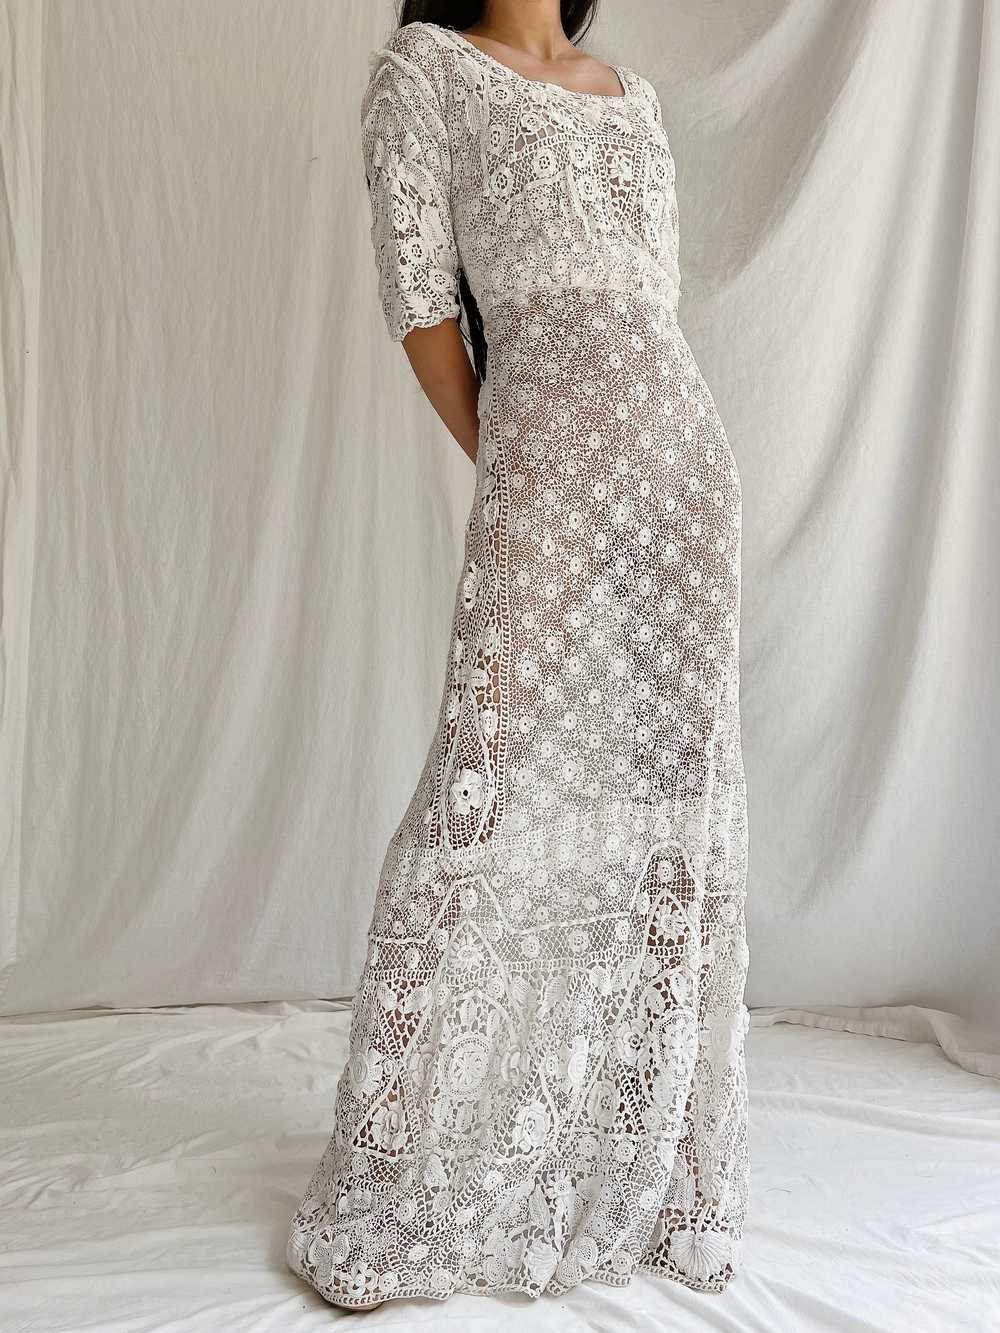 Antique Irish Lace Gown - S - image 7